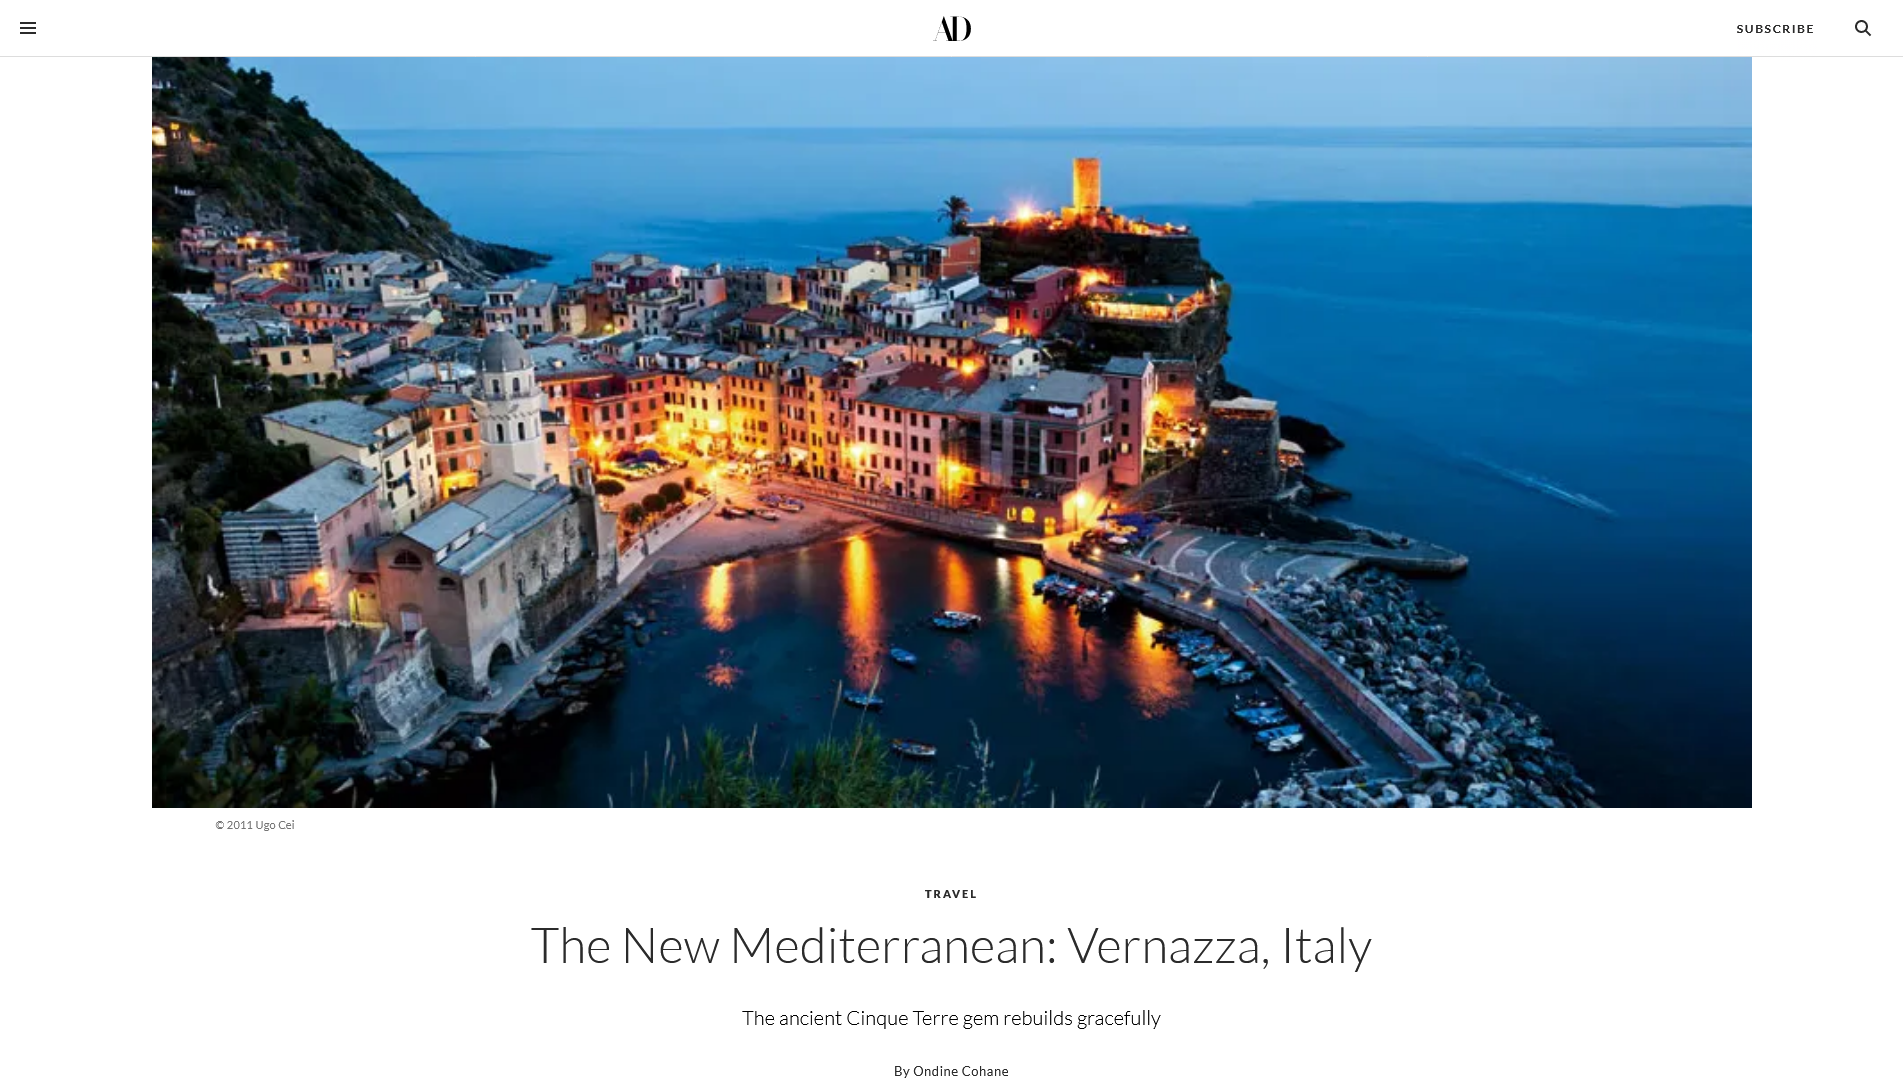 The New Mediterranean: Vernazza, Italy